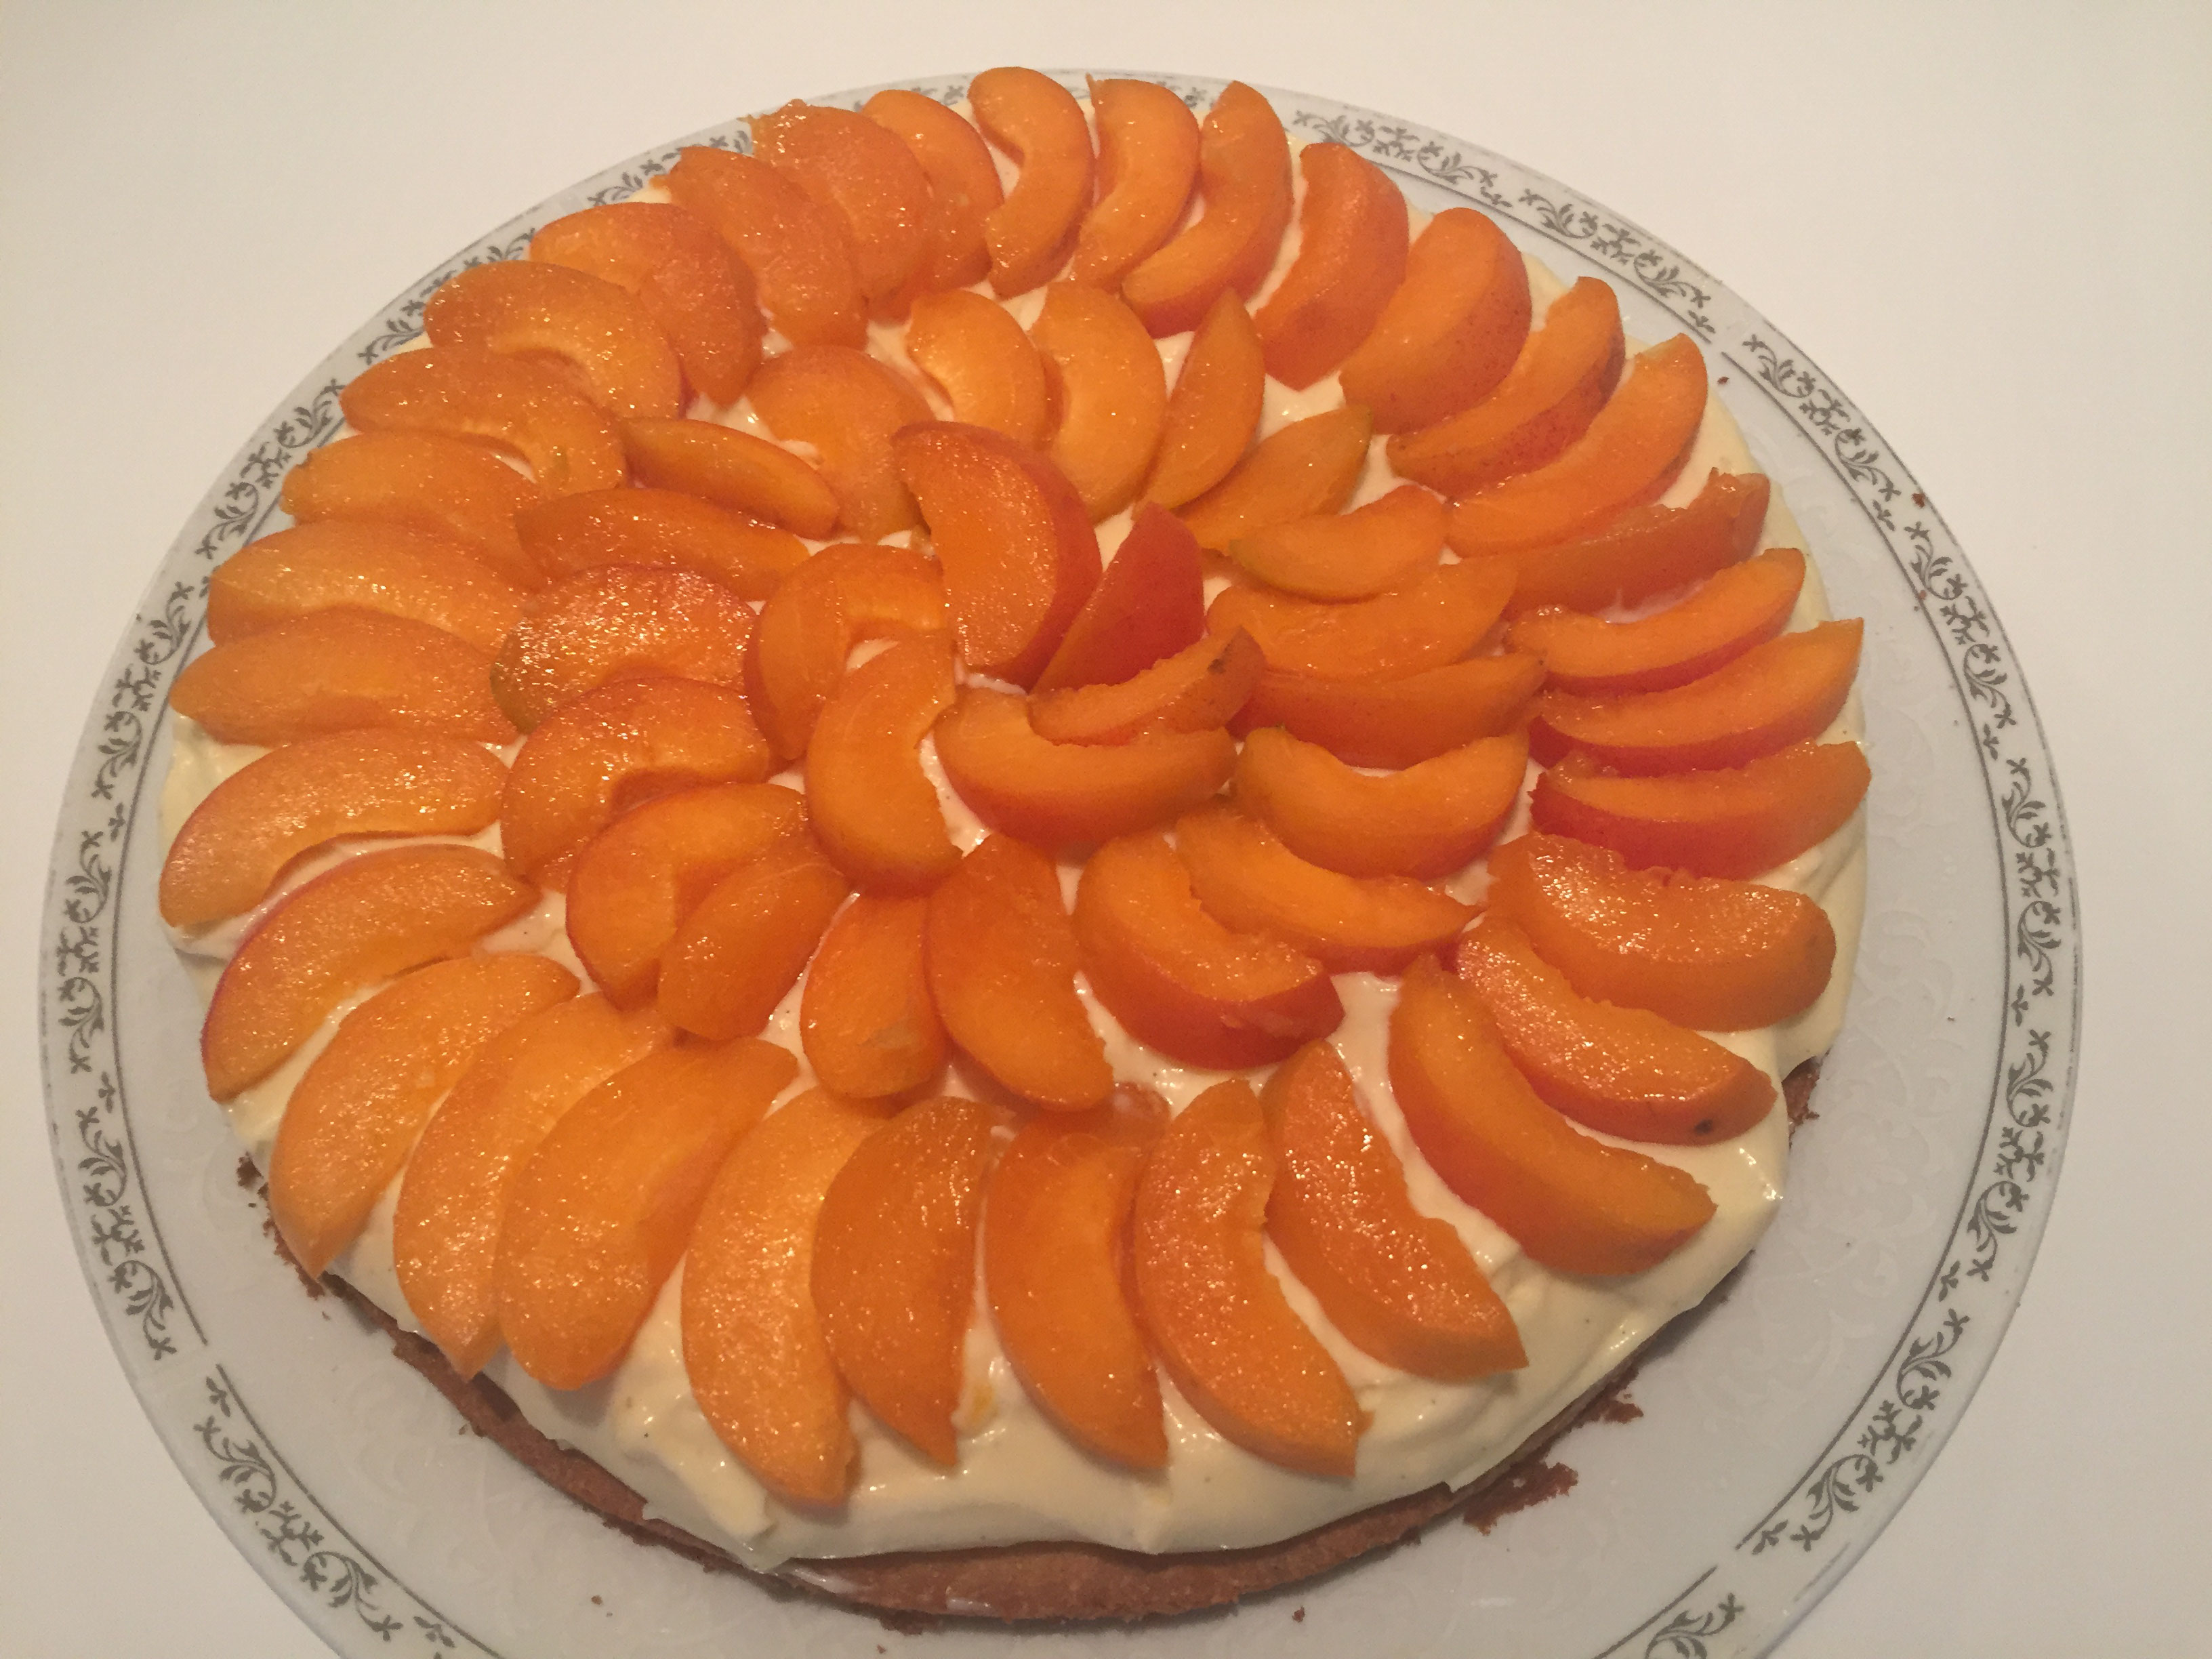 Aprikosen Tarte - Food Blog Kochphilosophen